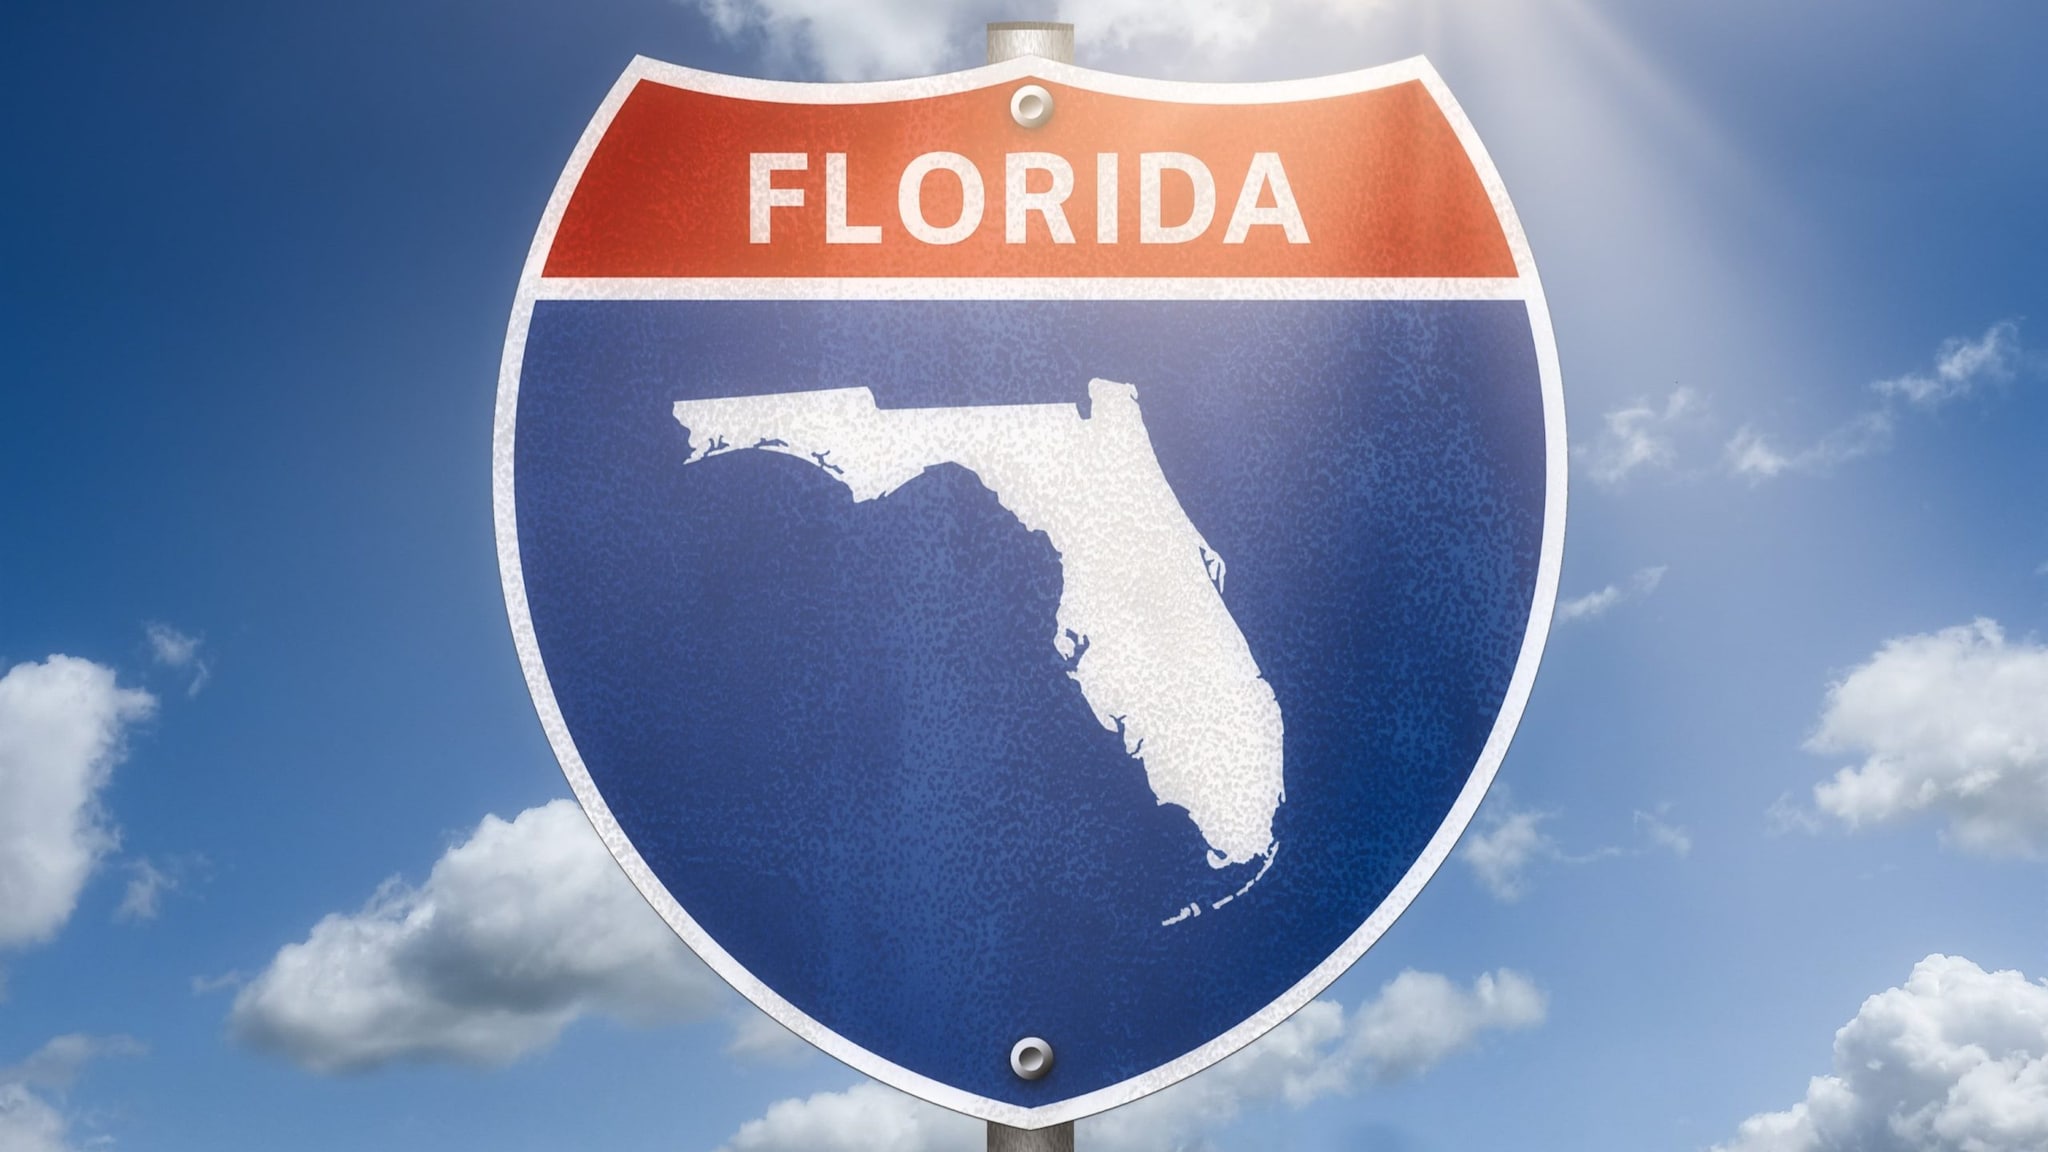 Florida state roadside sign